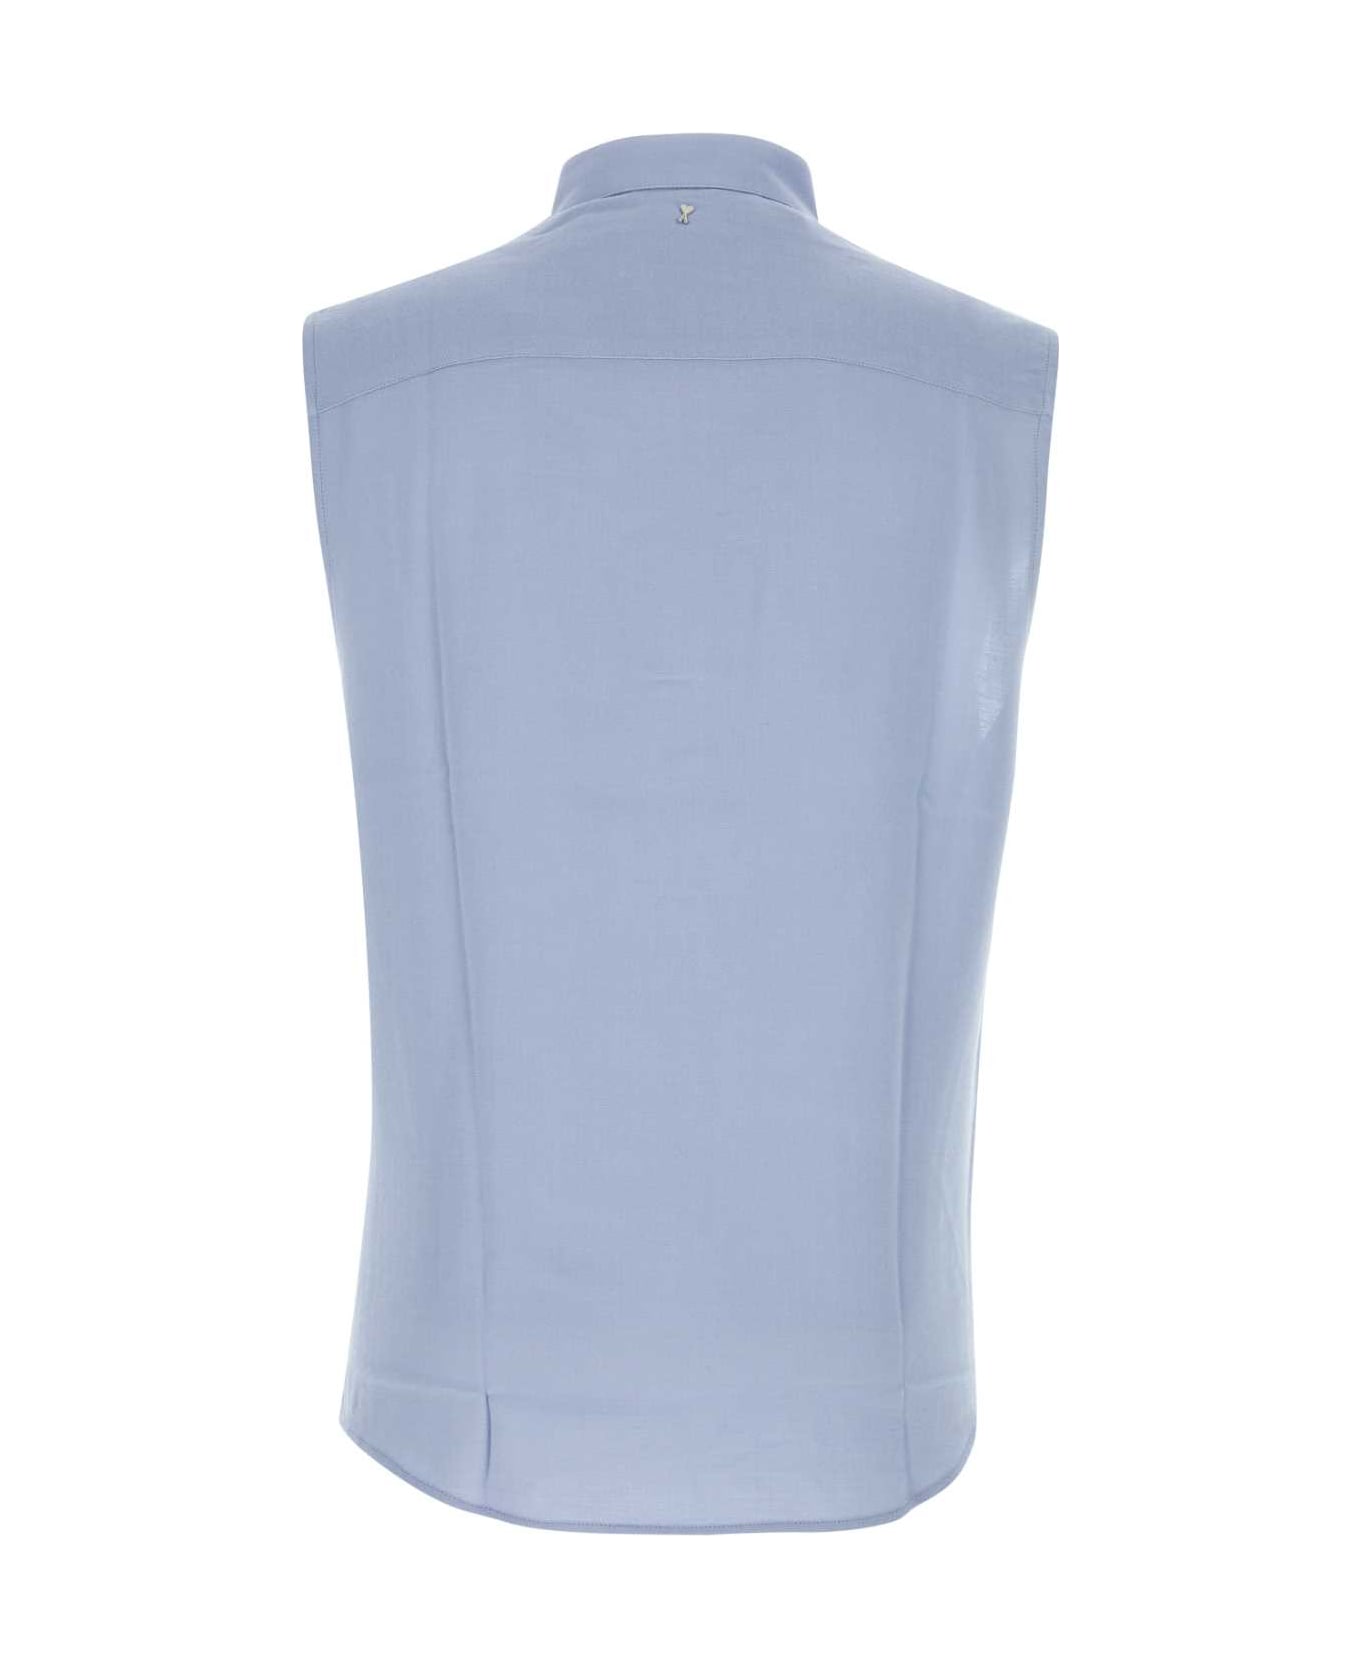 Ami Alexandre Mattiussi Light Blue Wool And Viscose Shirt - CASHMEREBLUE